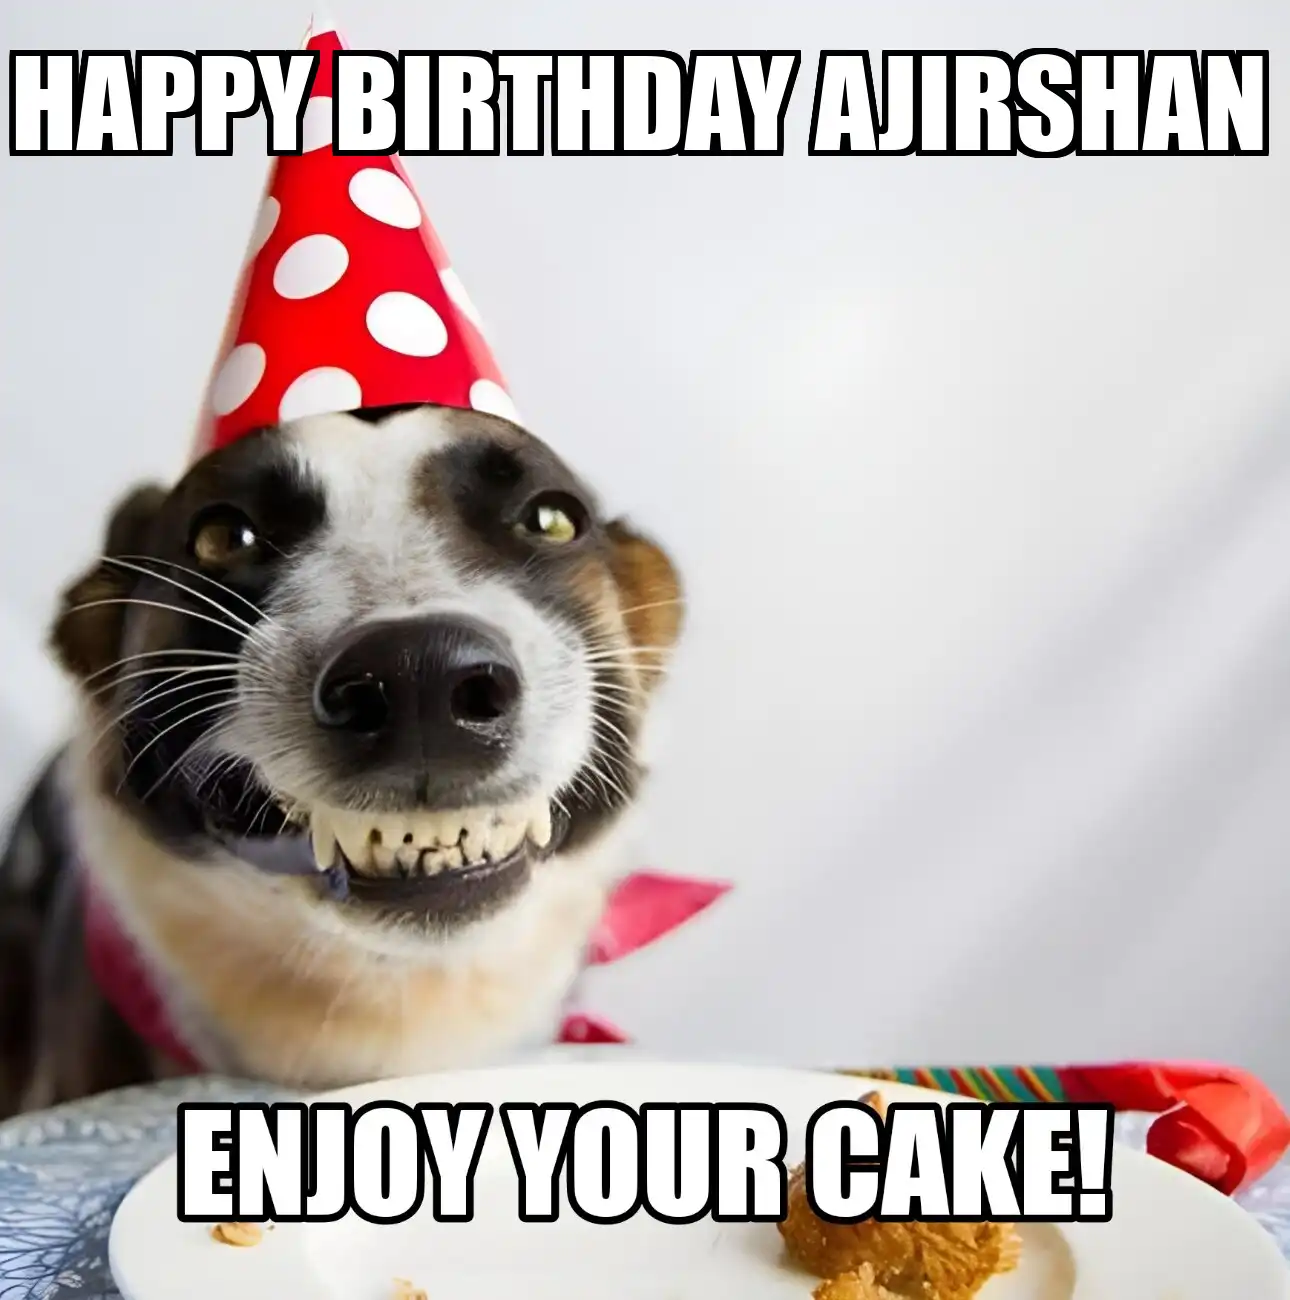 Happy Birthday Ajirshan Enjoy Your Cake Dog Meme